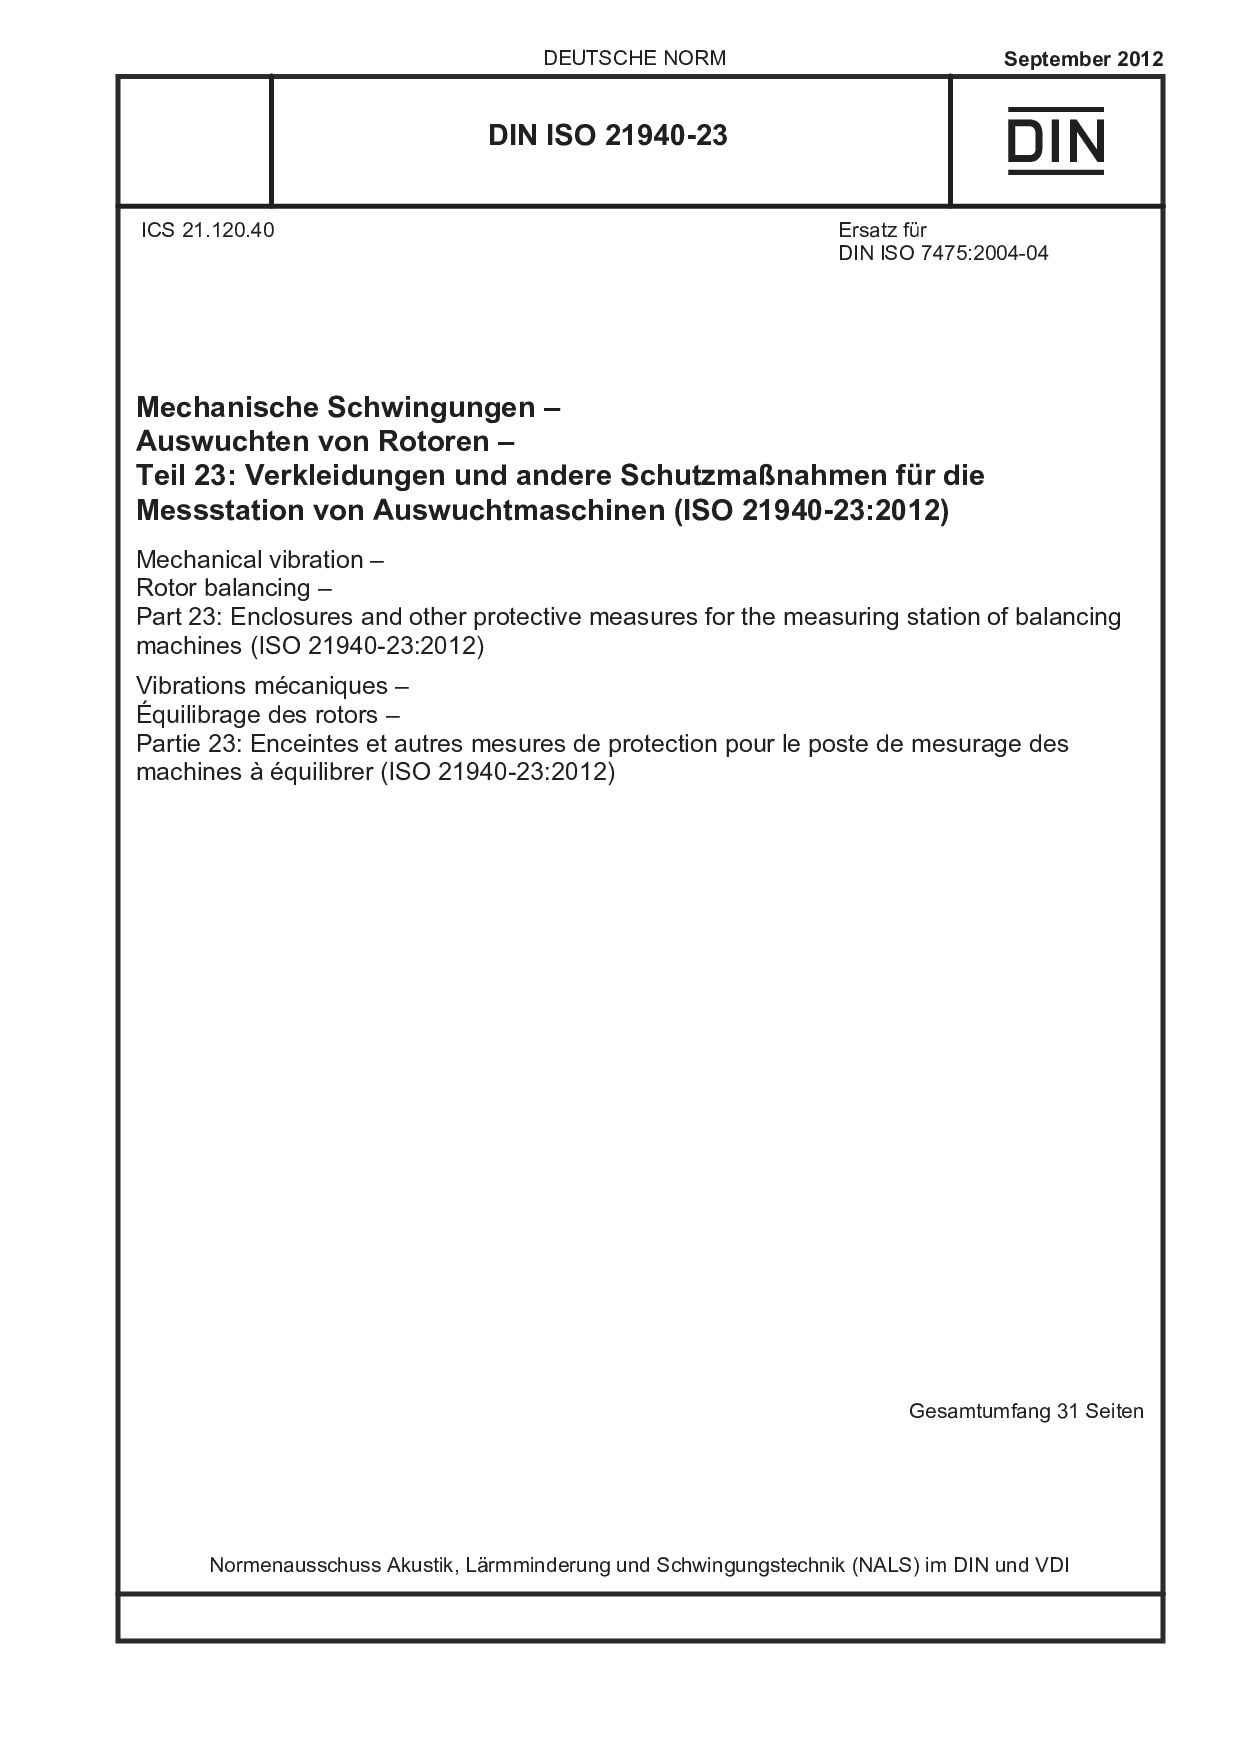 DIN ISO 21940-23:2012